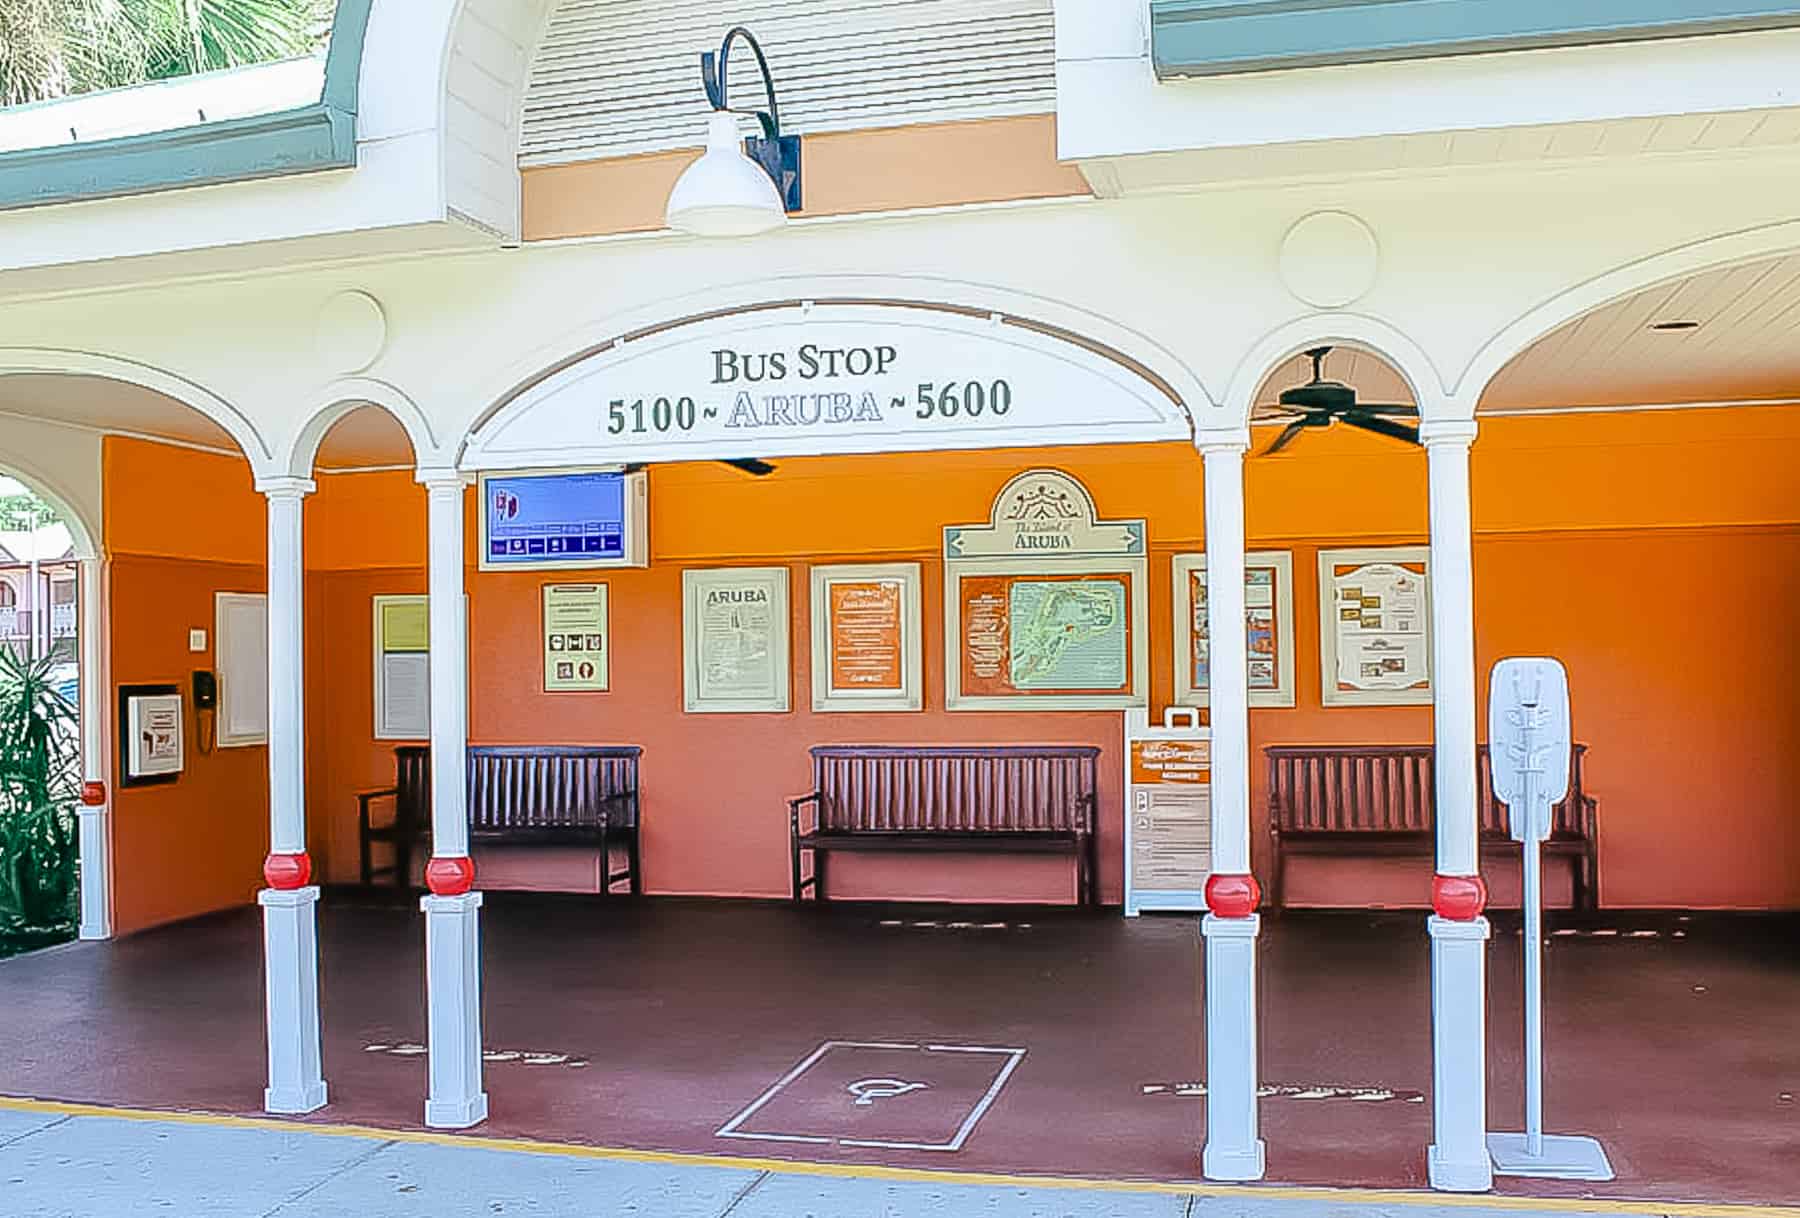 Caribbean Beach Bus Stop for Disney's Animal Kingdom 